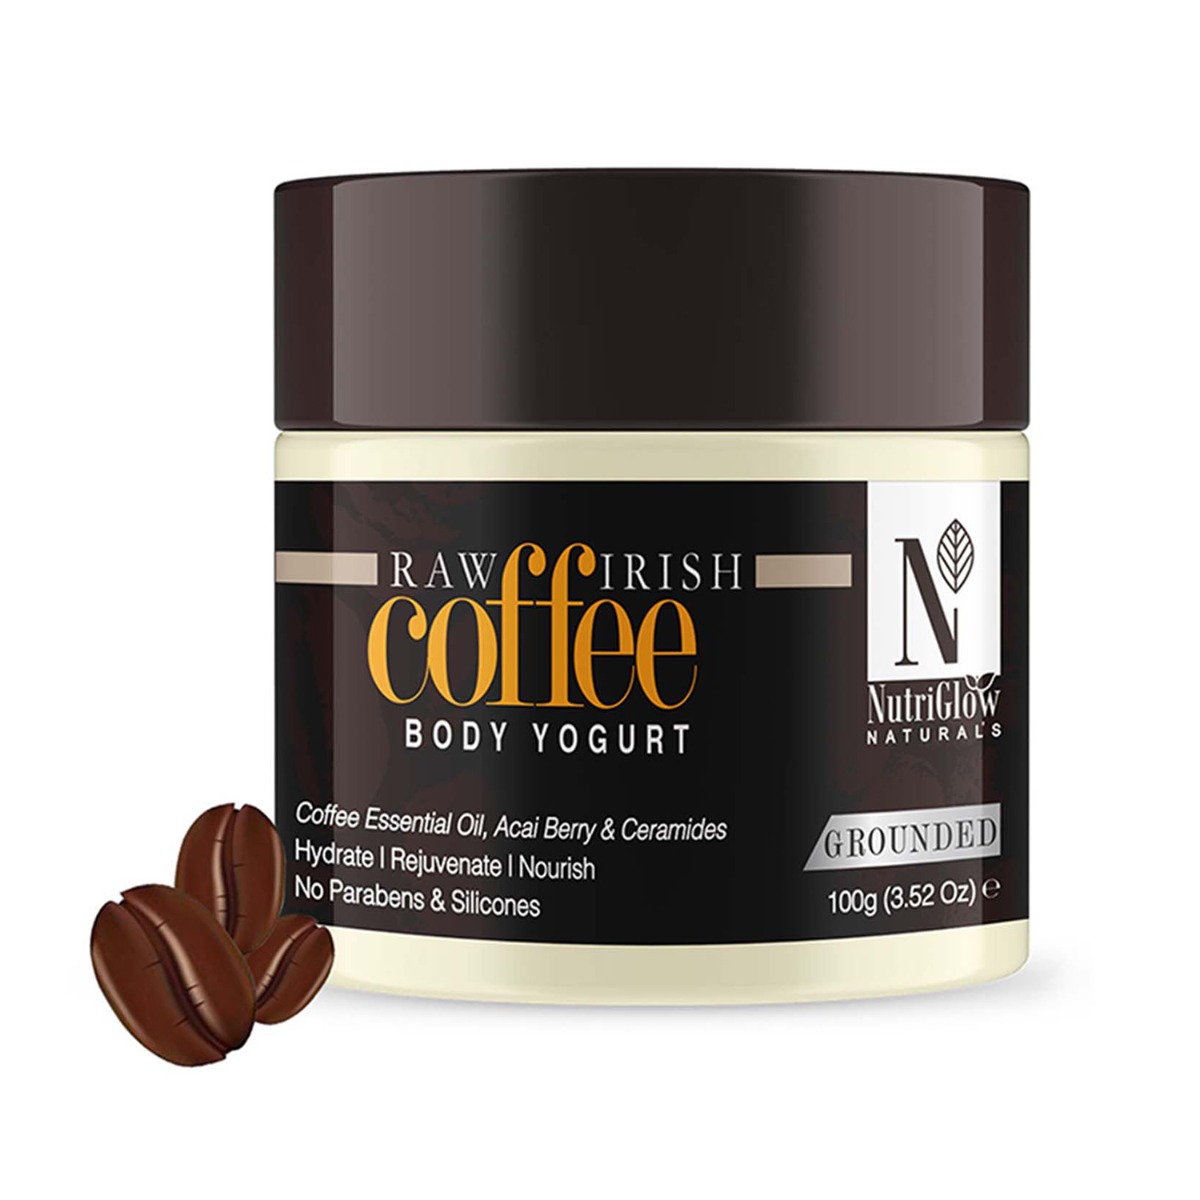 NutriGlow Natural's Raw Irish Coffee Body Yogurt, 100gm